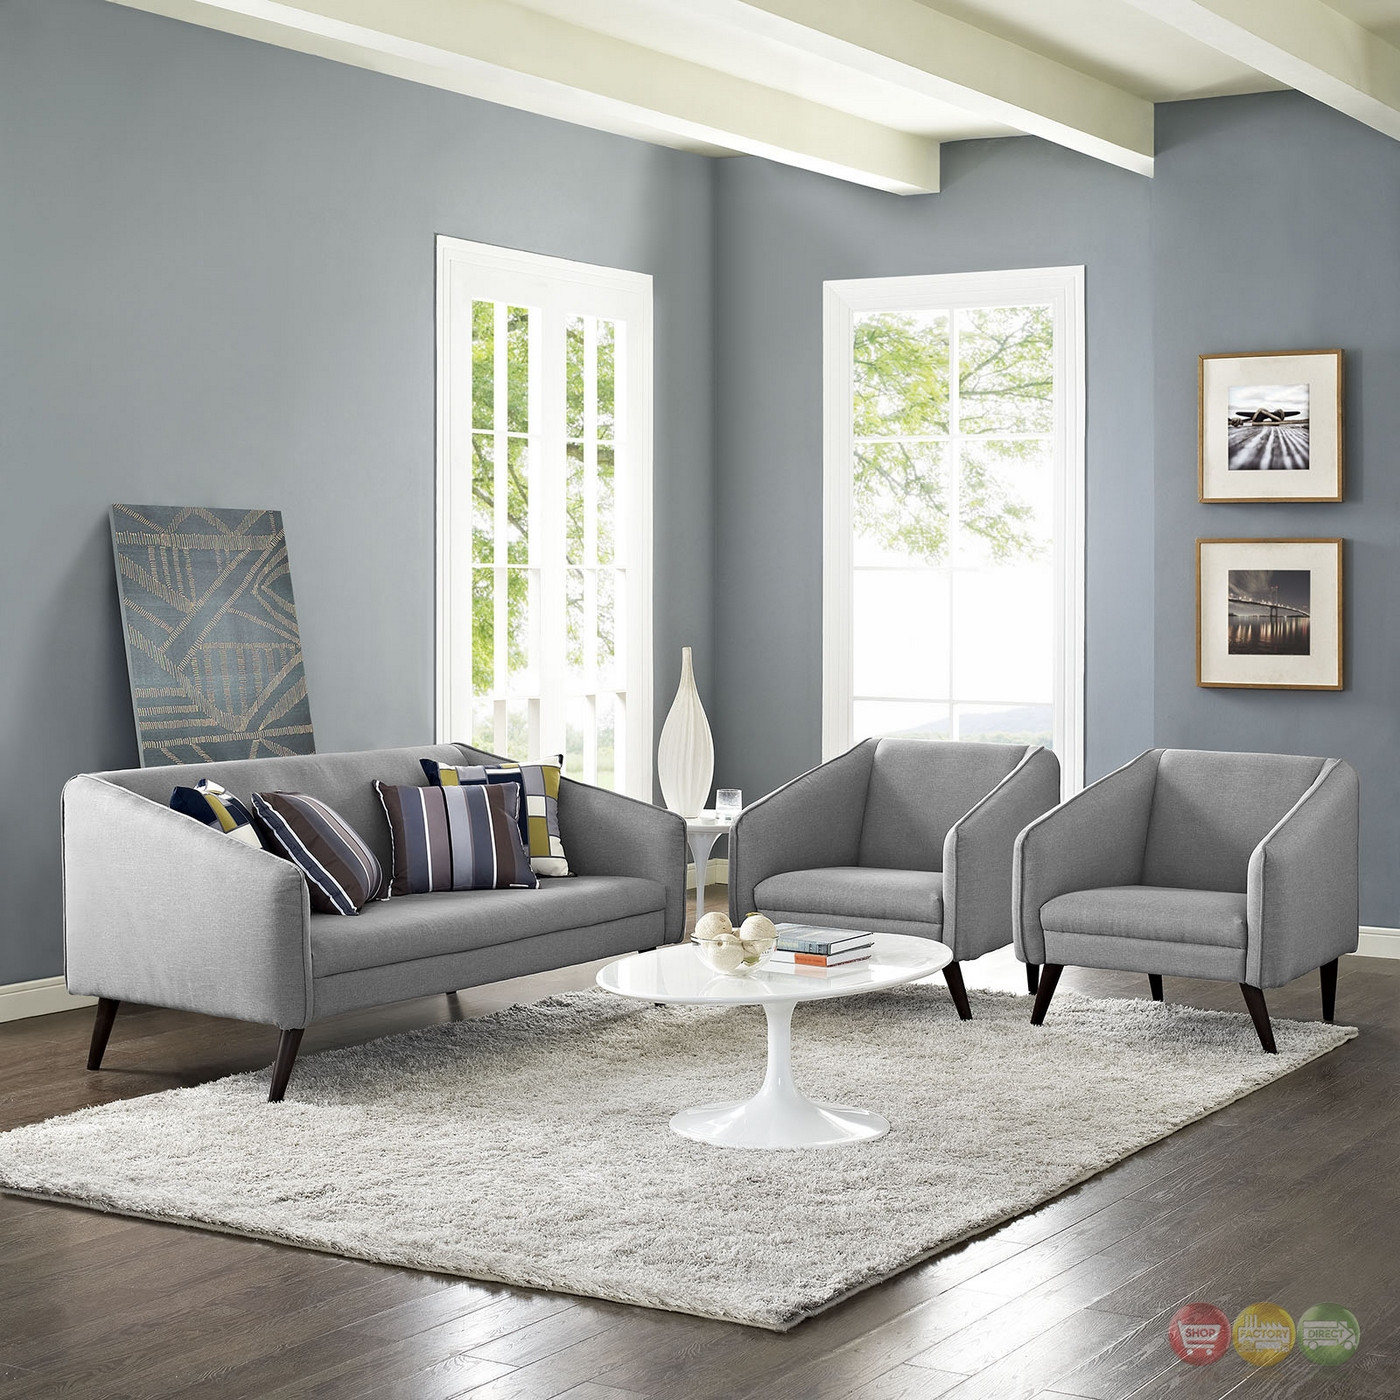 Light Grey Couch Living Room
 Slide Modern 3 pc Upholstered Sofa & Armchairs Living Room